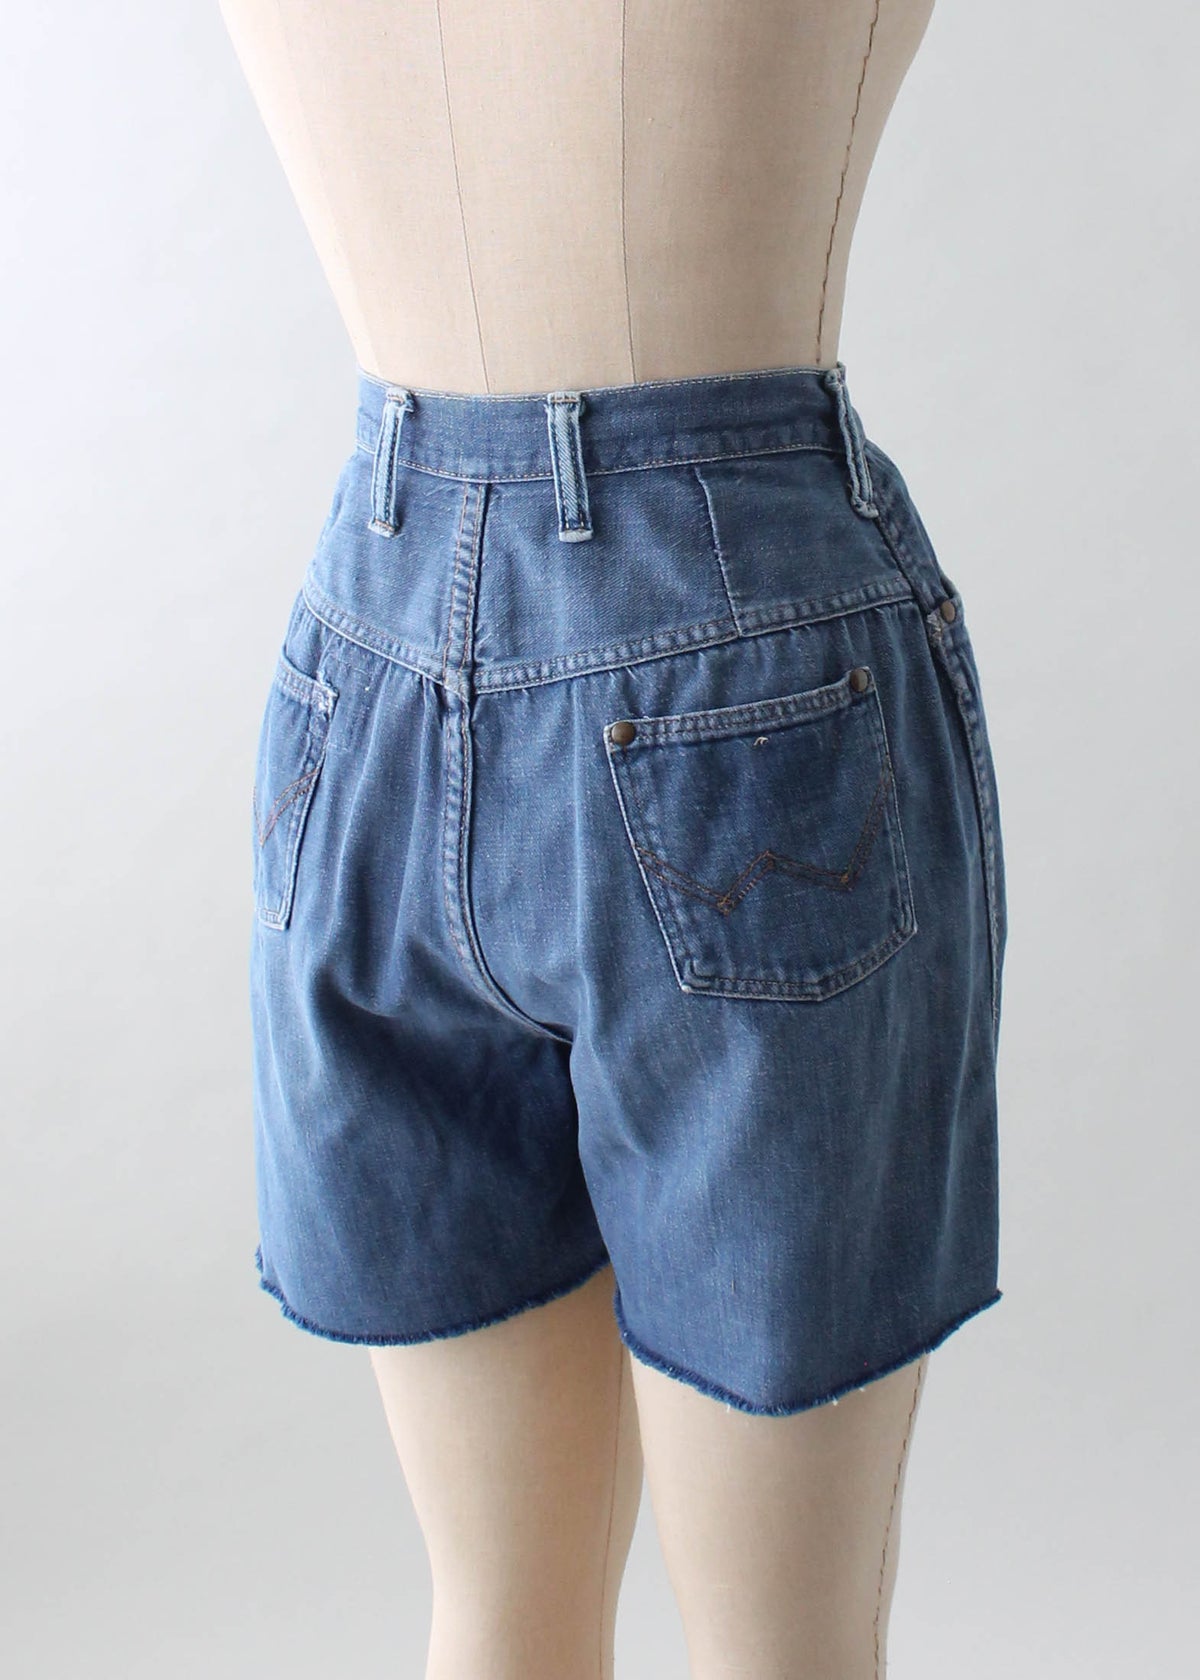 Vintage 1960s Wrangler Cut Off Jean Shorts - Raleigh Vintage